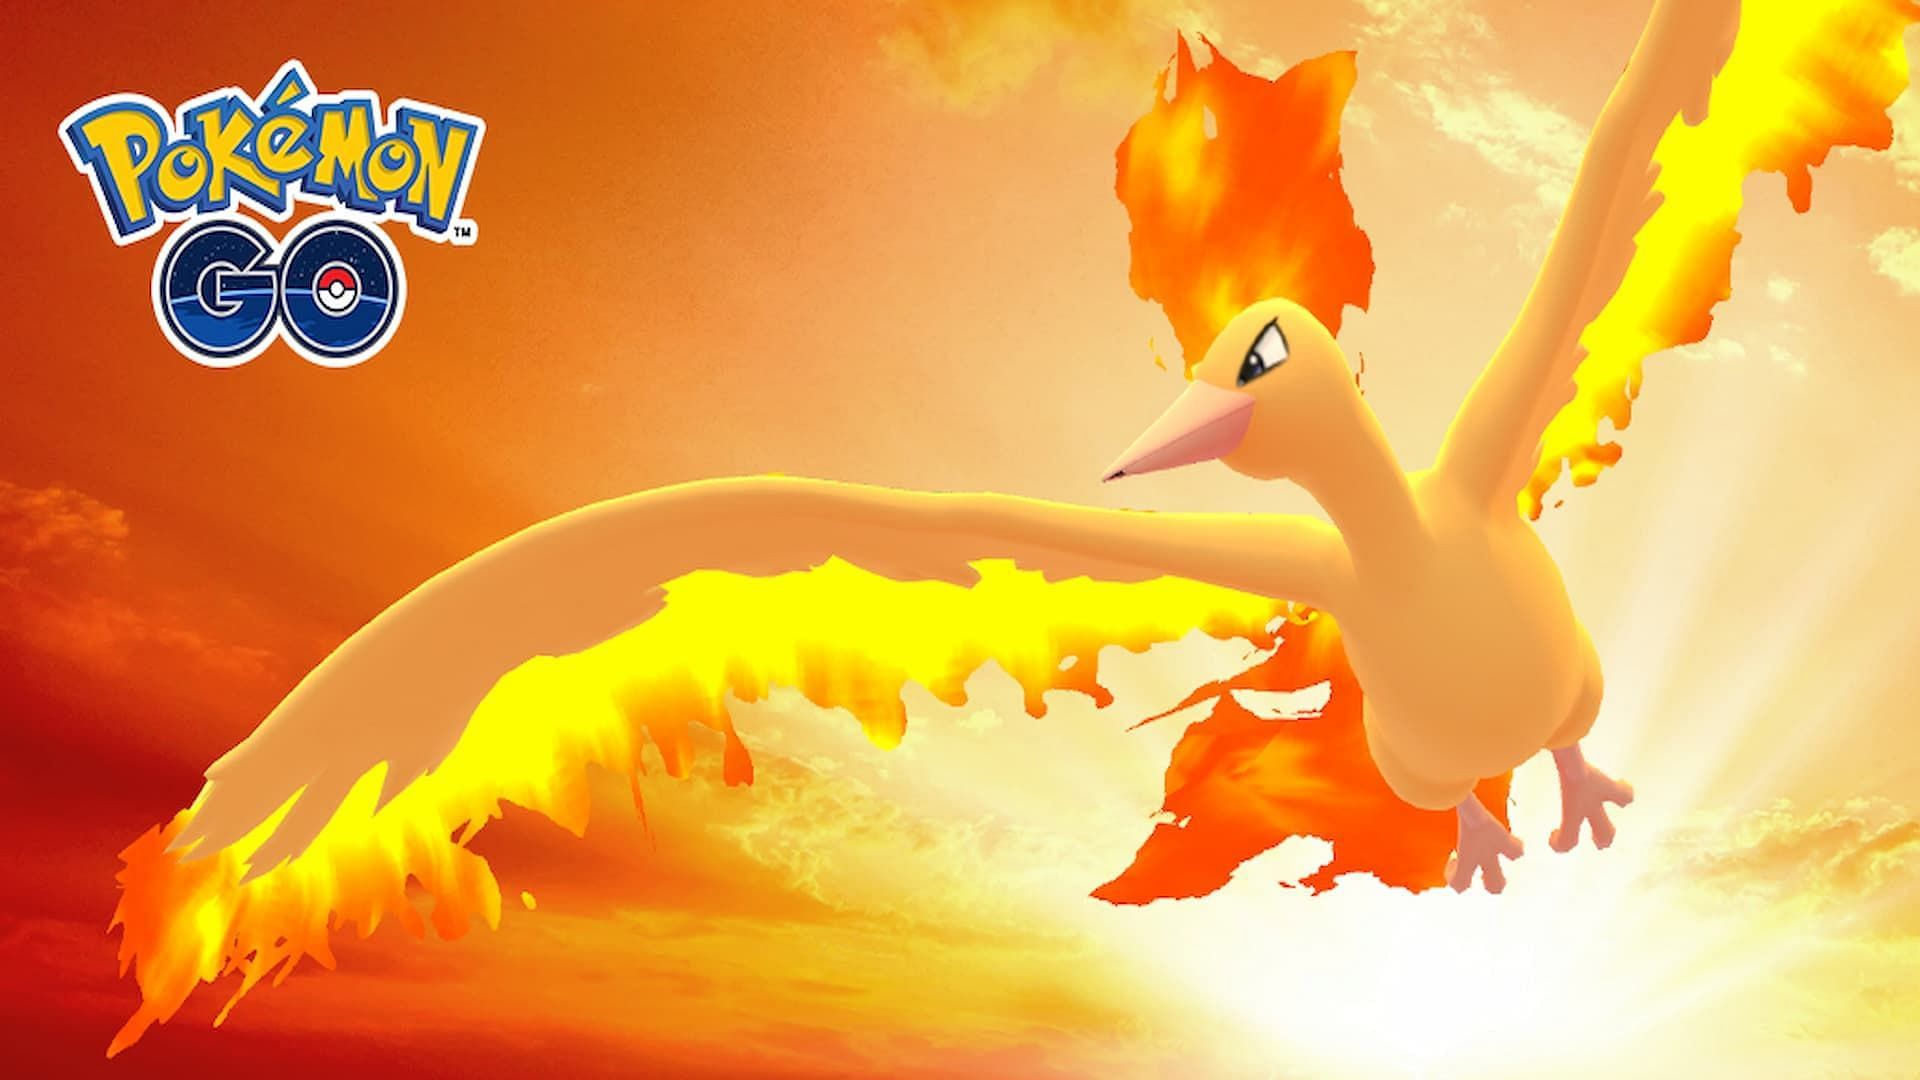 Moltres - The Flame Pokemon (Image via Niantic)